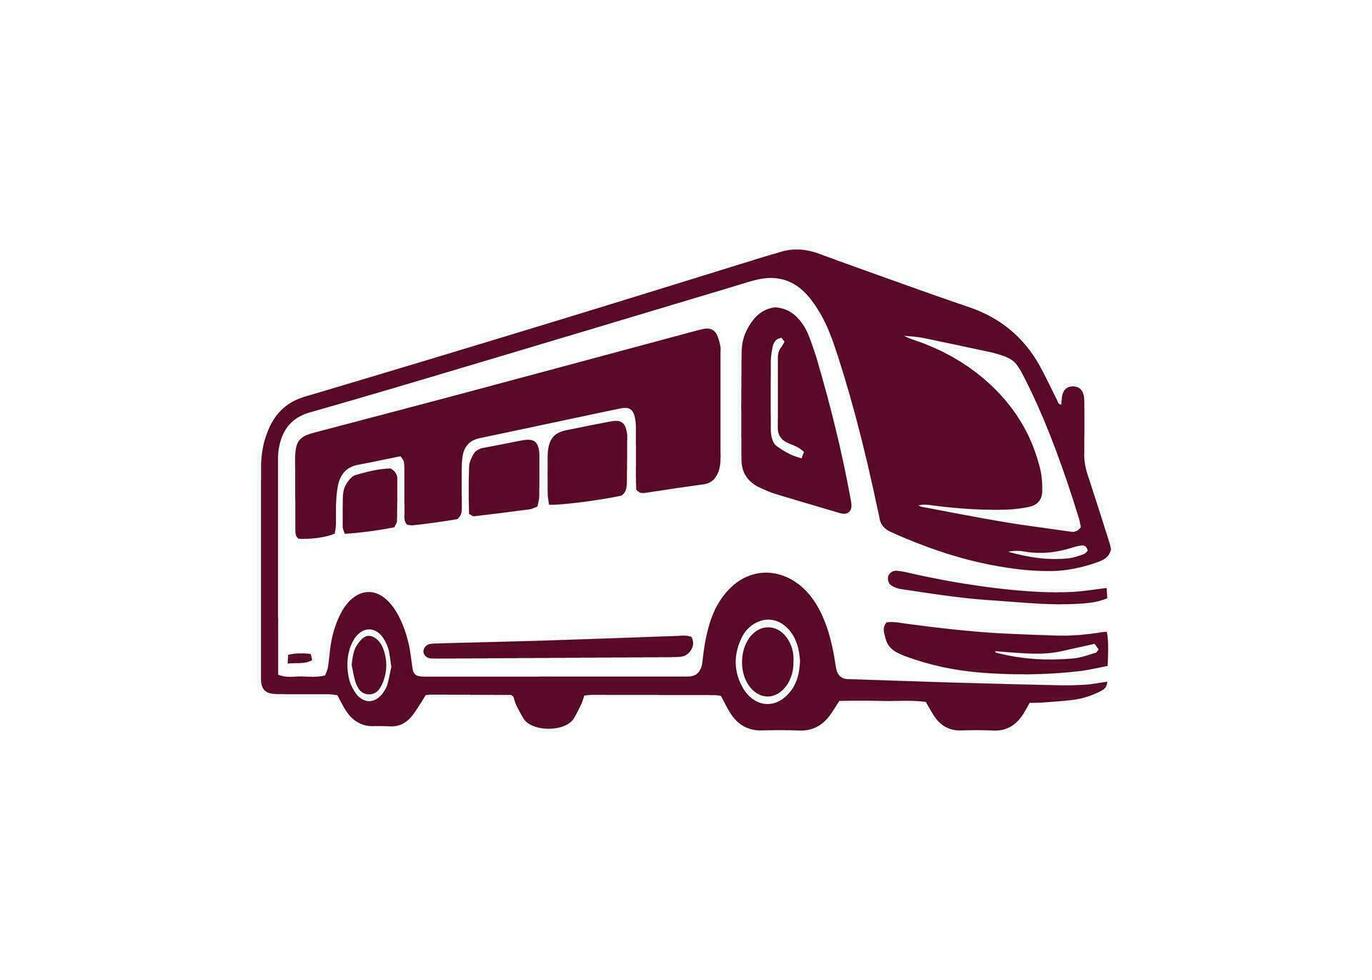 minimal logo of bus icon school bus vector silhouette isolated design